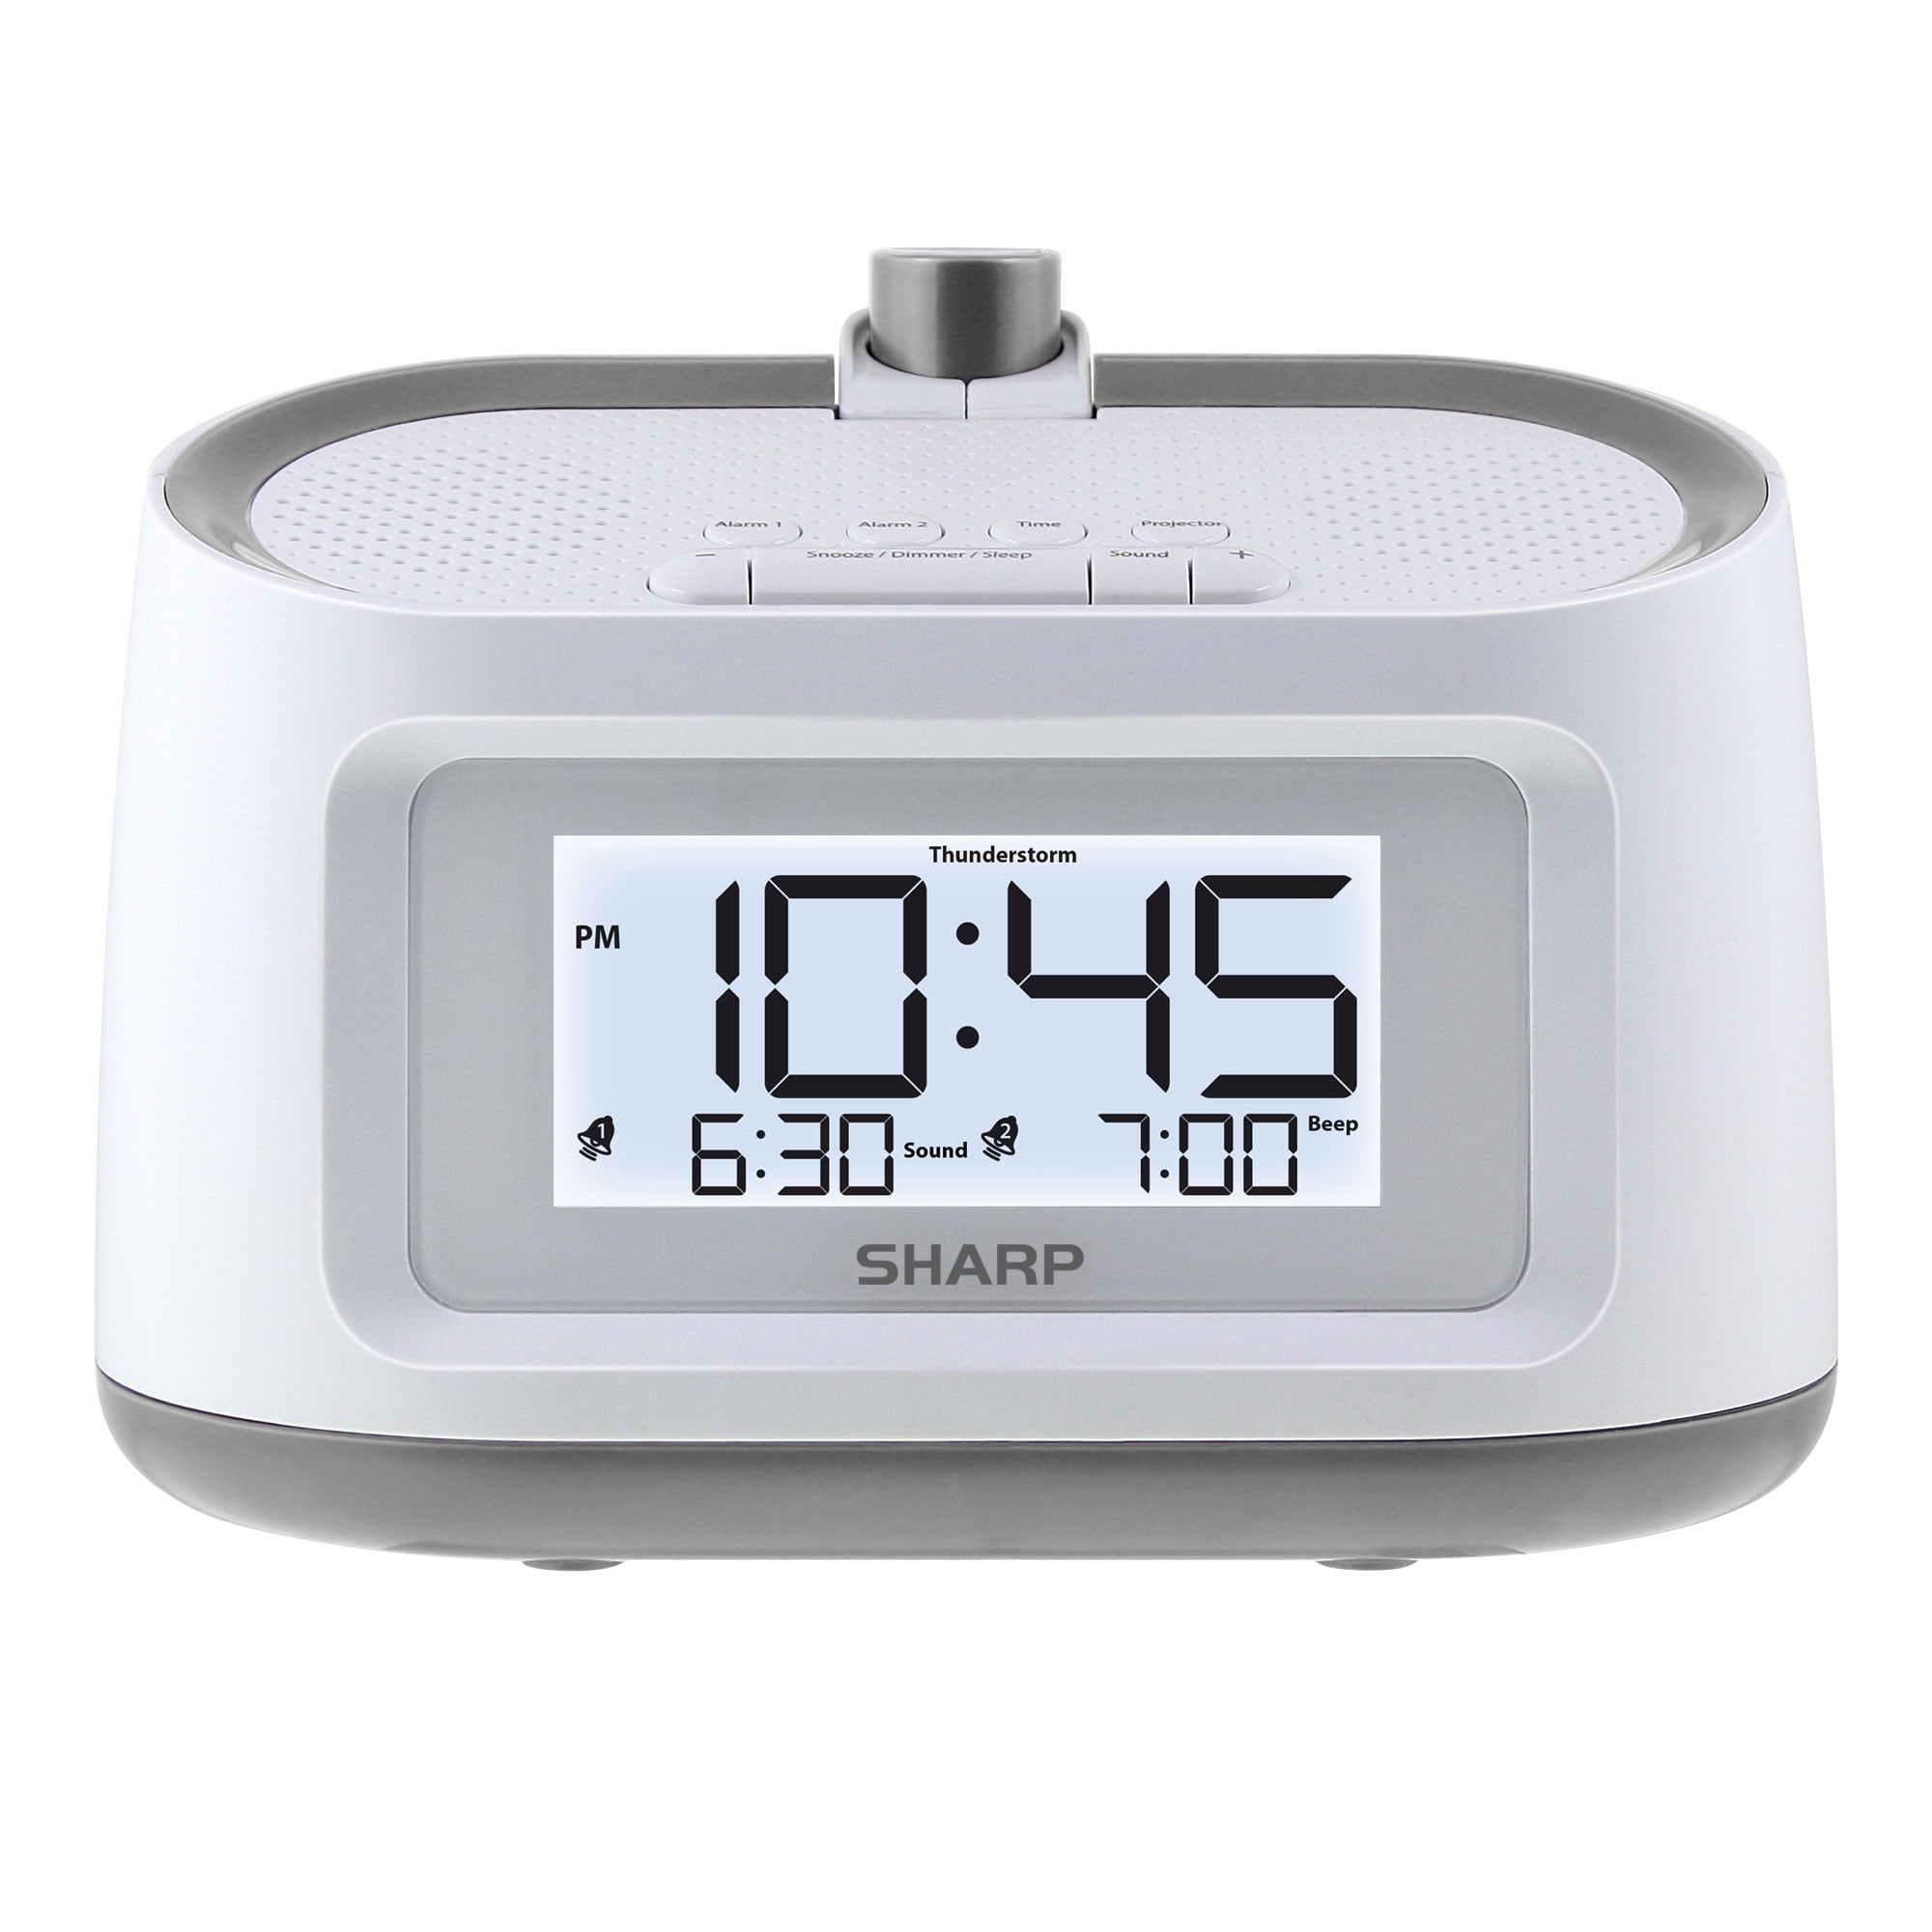  SHARP Twin Bell Alarm Clock - Loud Alarm - Great for